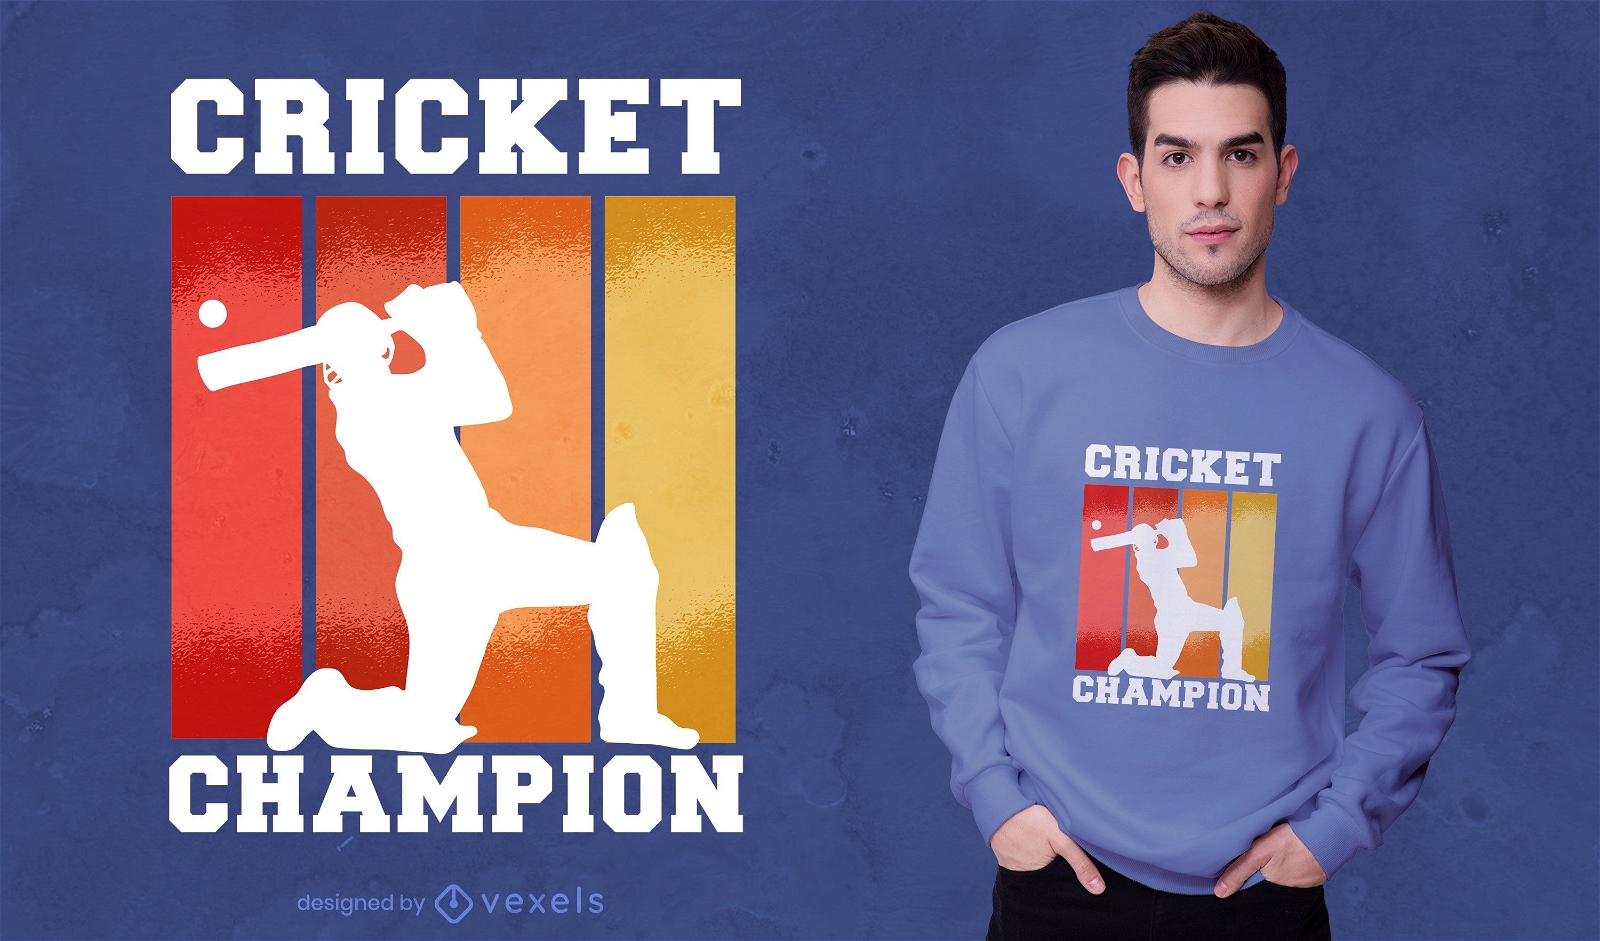 Cricket player champion t-shirt design